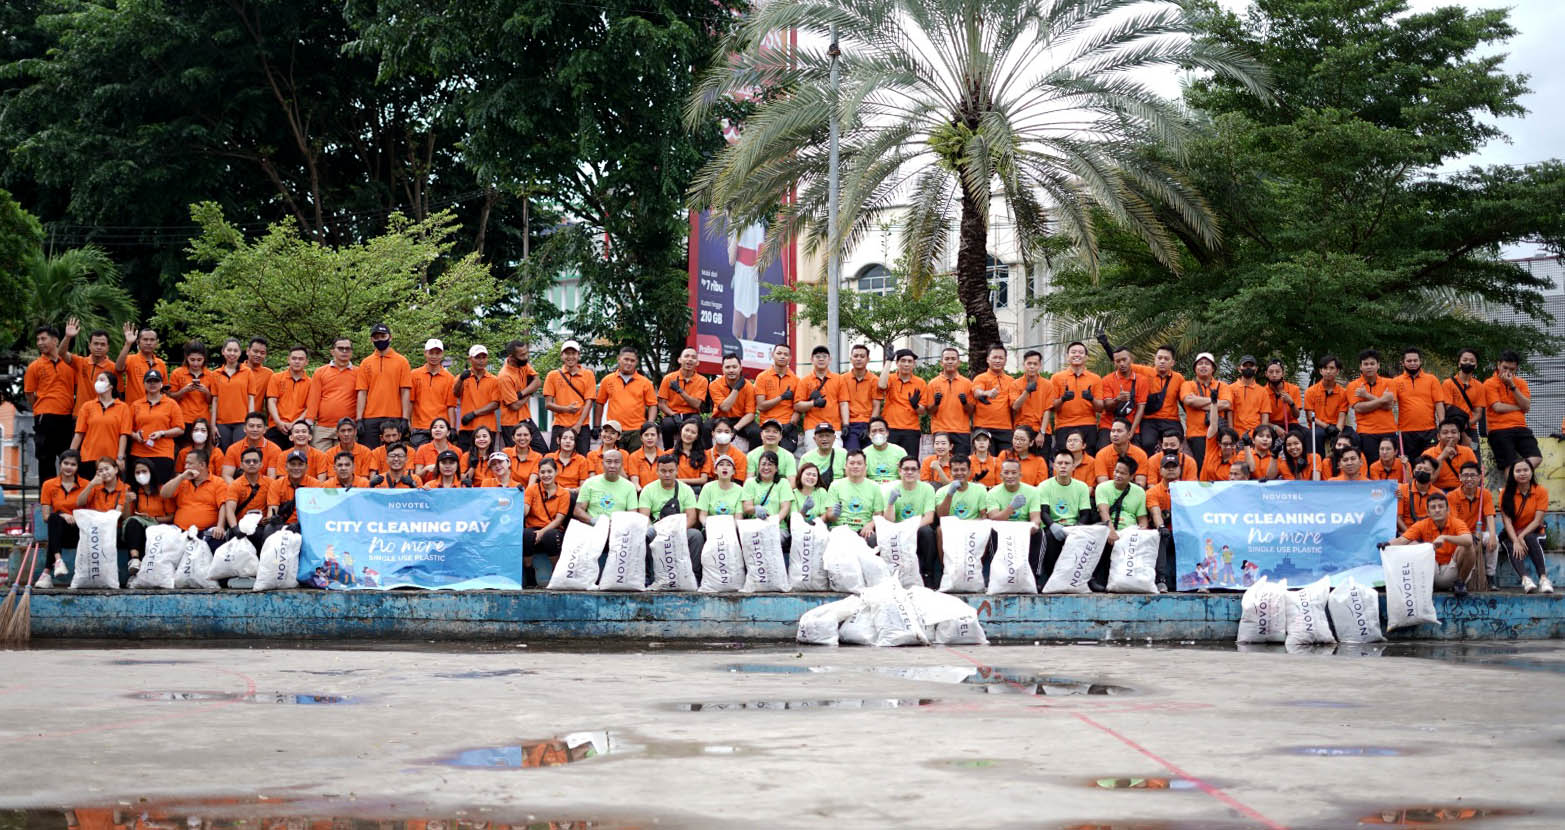 Novotel Lampung Kampanyekan No More Single Use Plastic lewat City Cleaning Day 